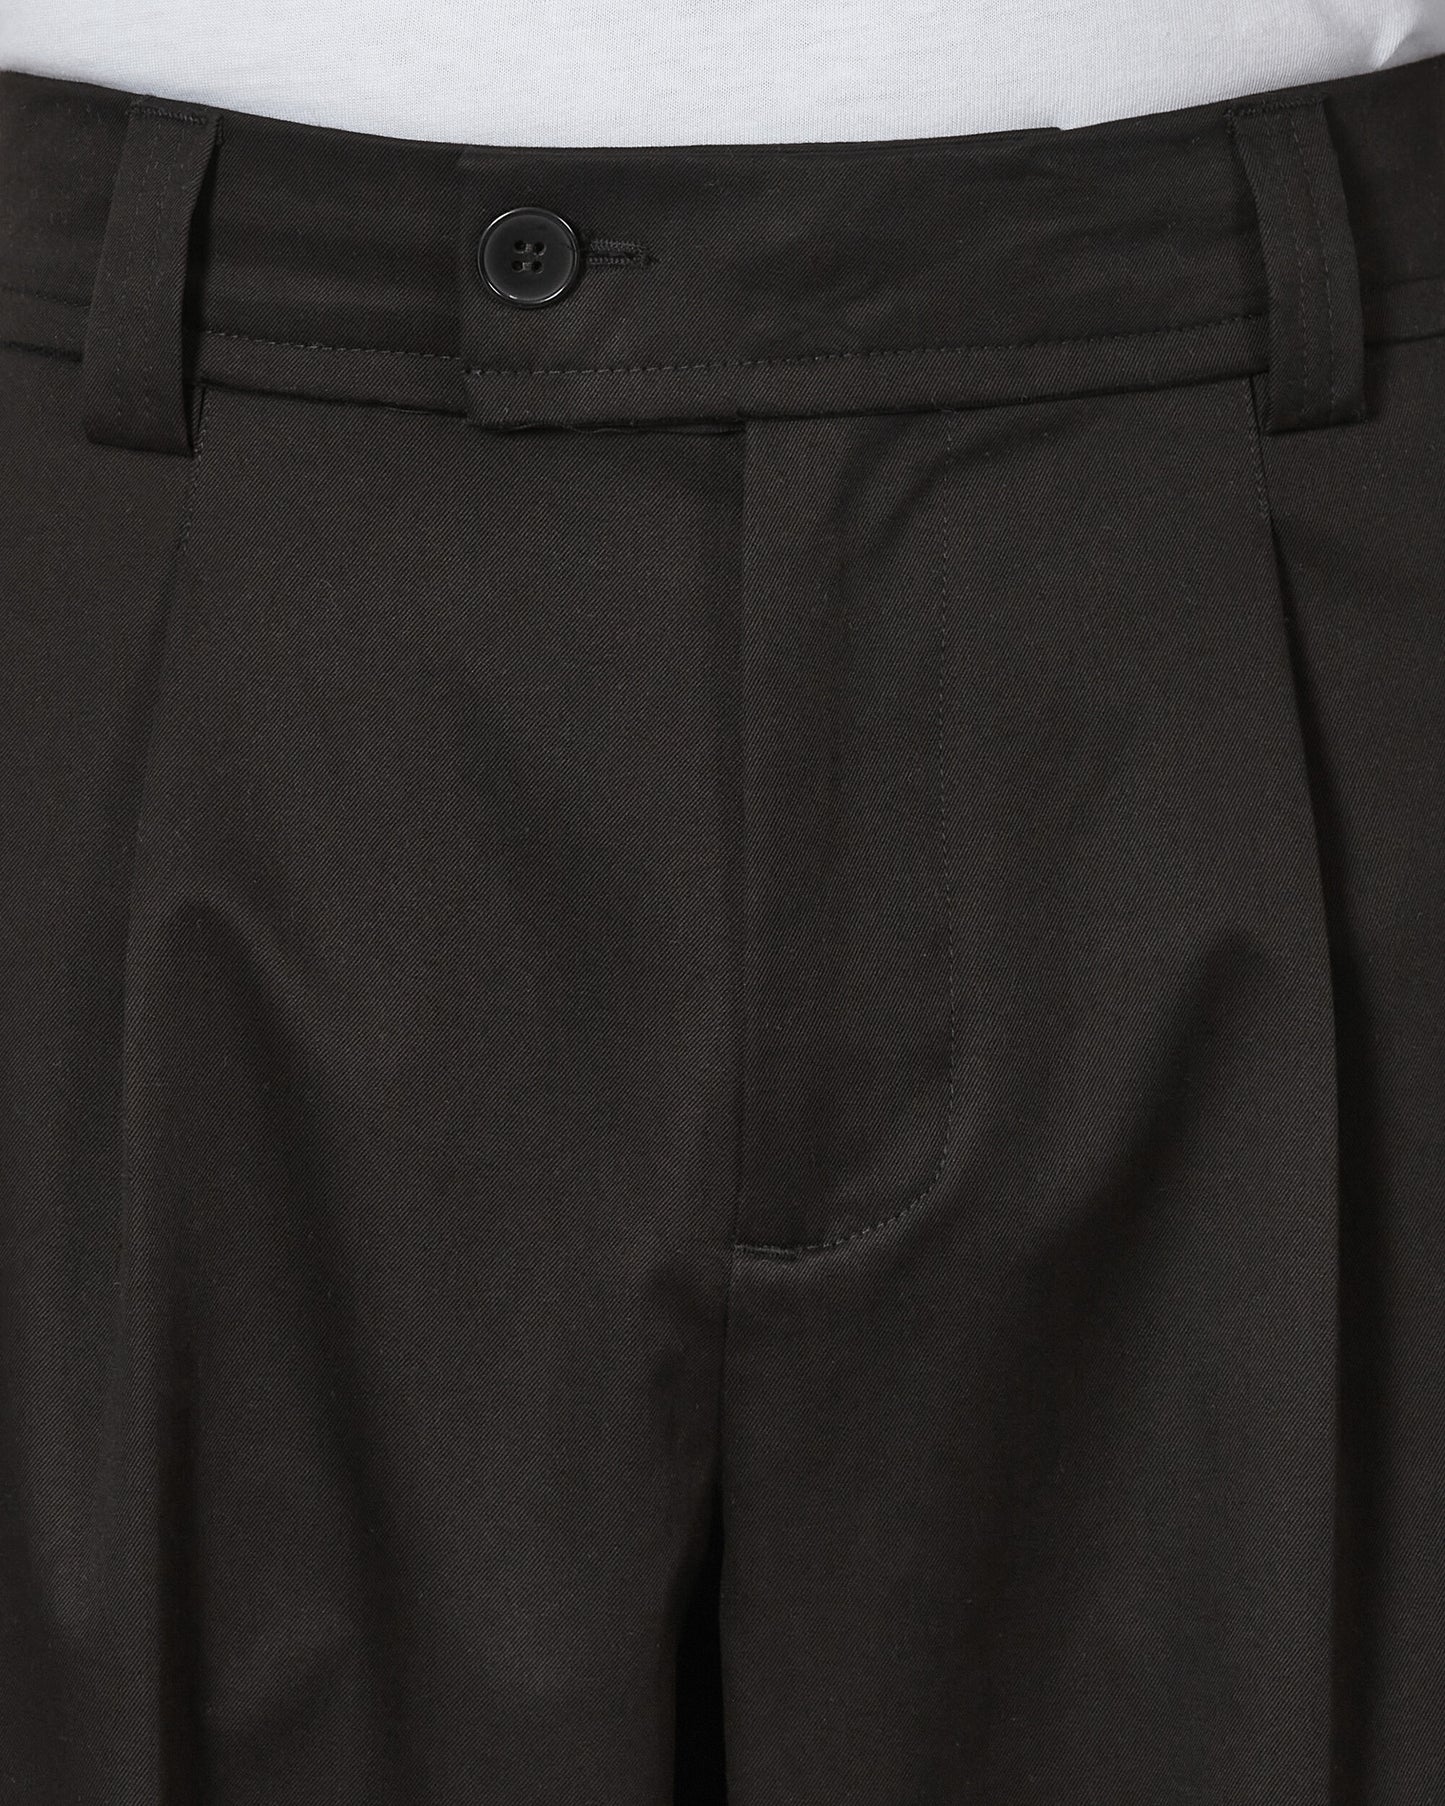 mfpen Patch Trousers Black Pants Casual M124-50  1